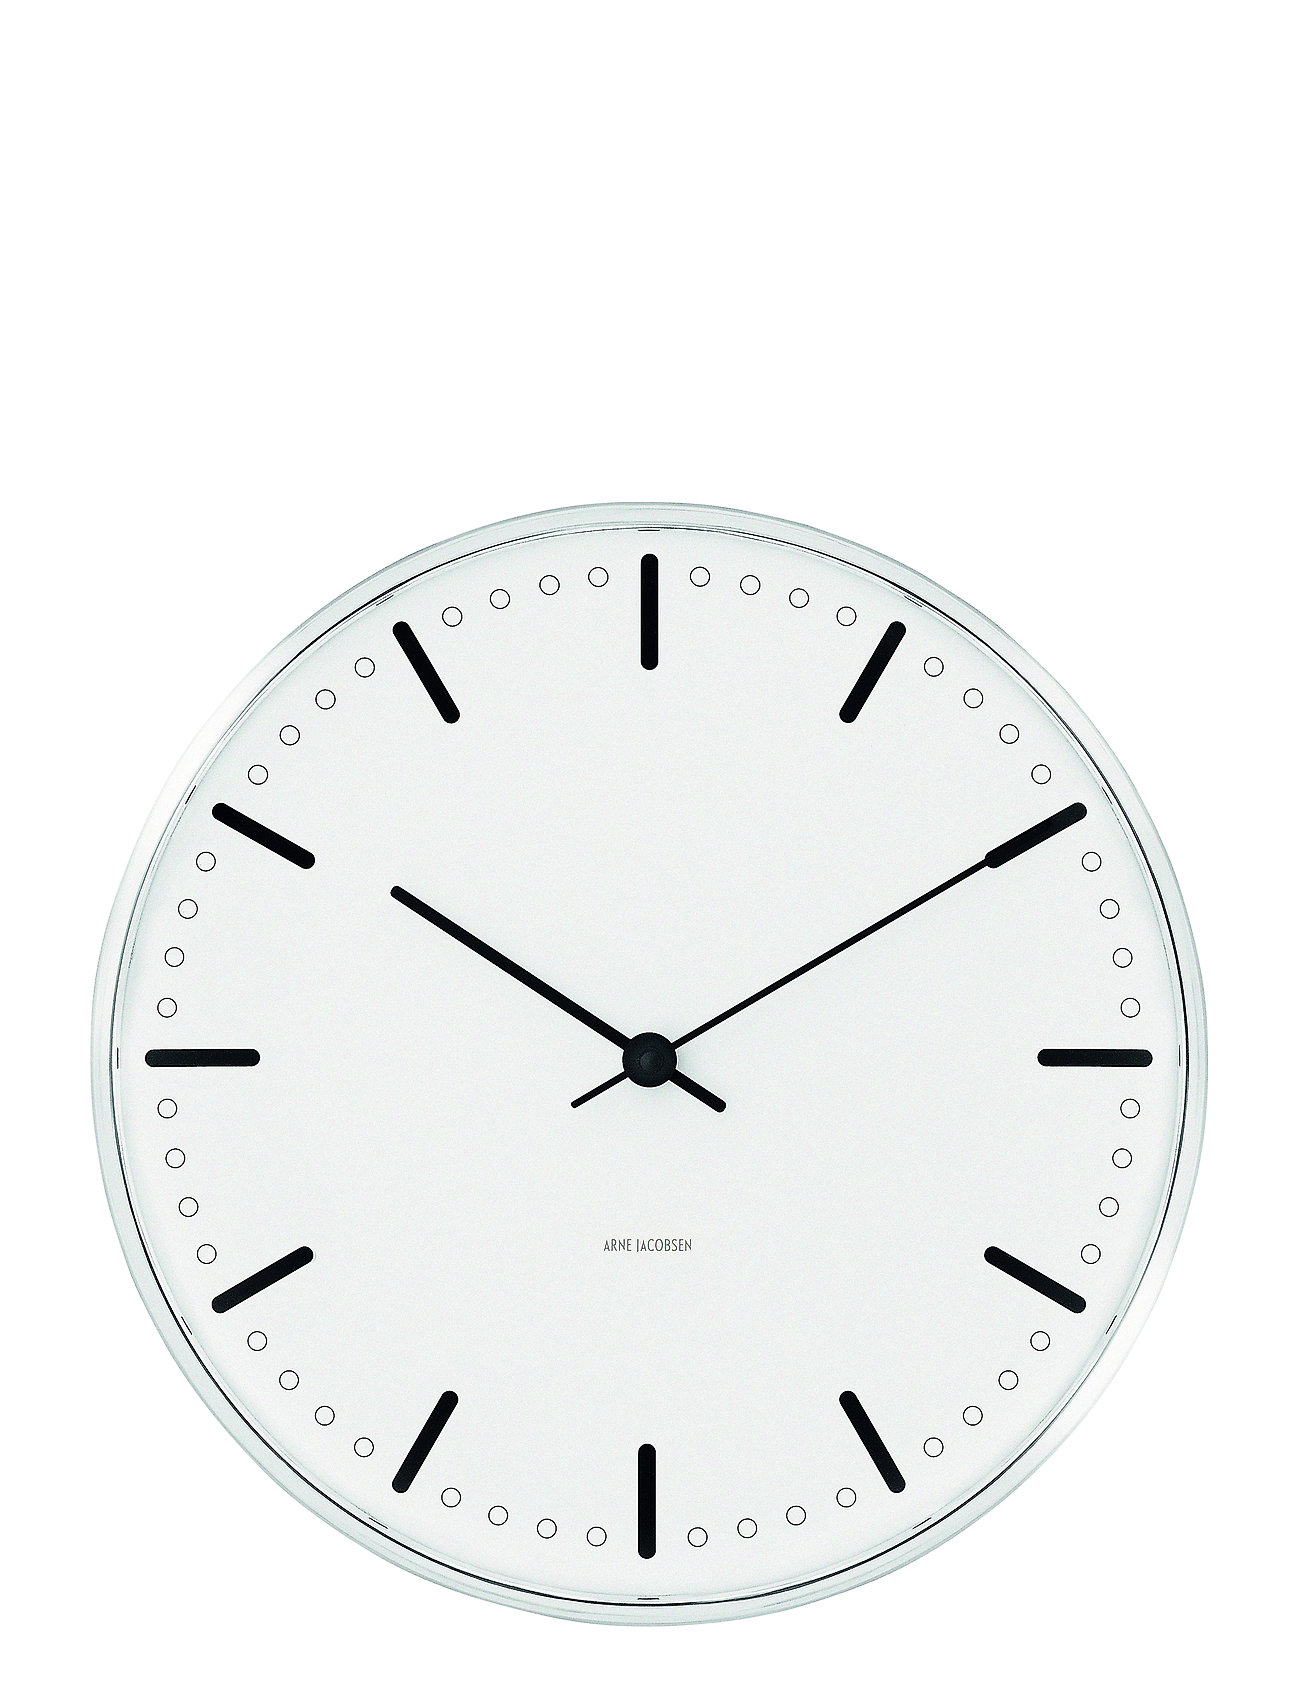 "Arne Jacobsen Clocks" "City Hall Vægur Ø29 Cm Home Decoration Watches Wall Clocks White Arne